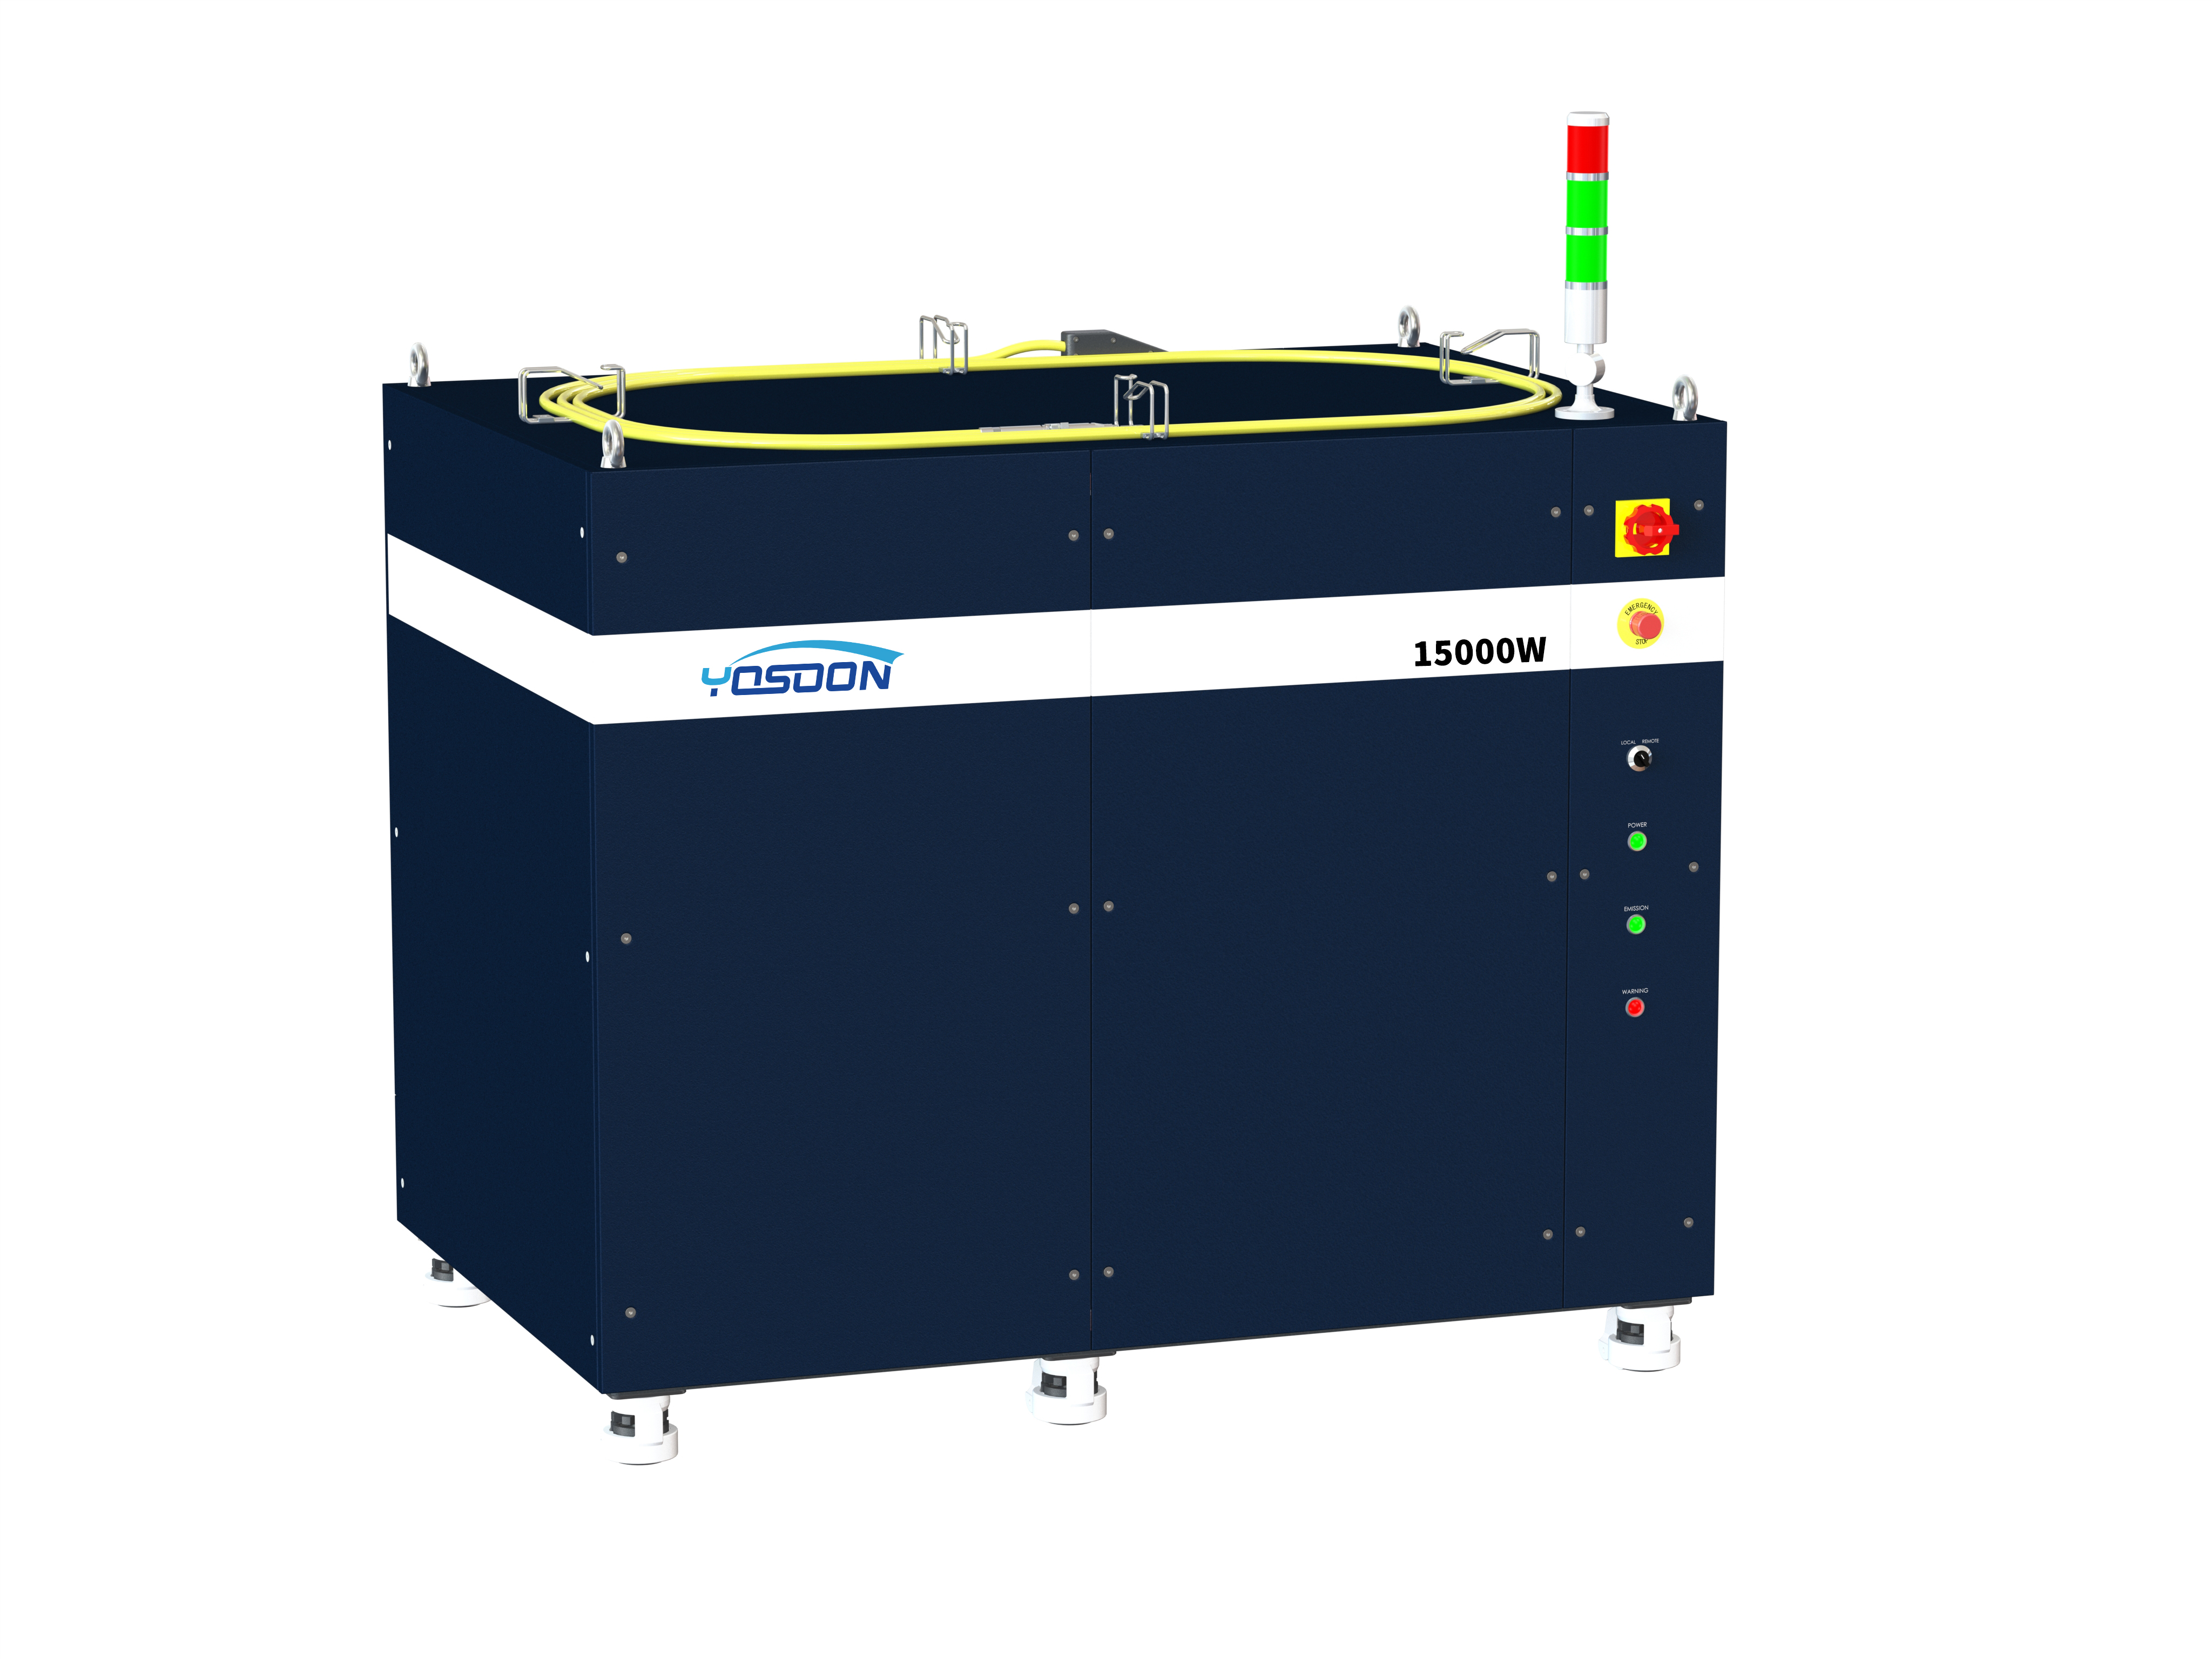 High power continuous fiber laser -15000W